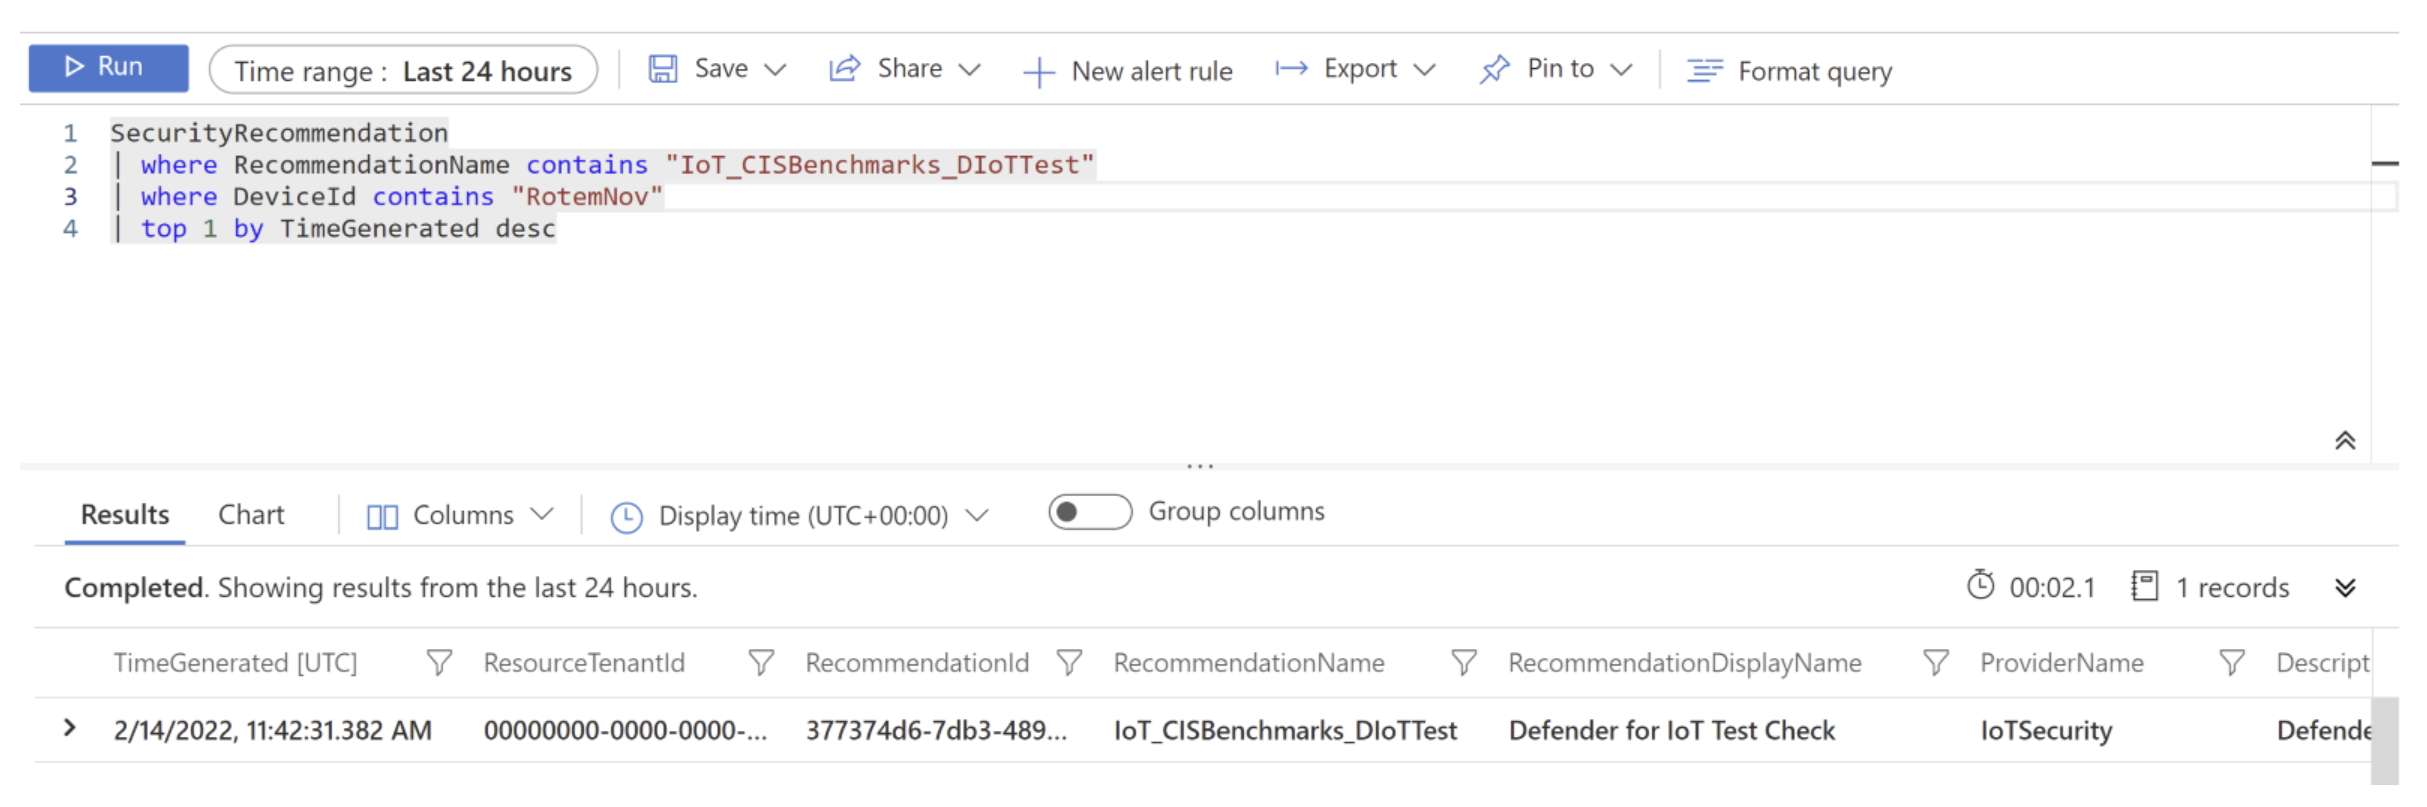 Captura de pantalla de la consulta de IoT_CISBenchmarks_DIoTTest que se ejecuta en Log Analytics.